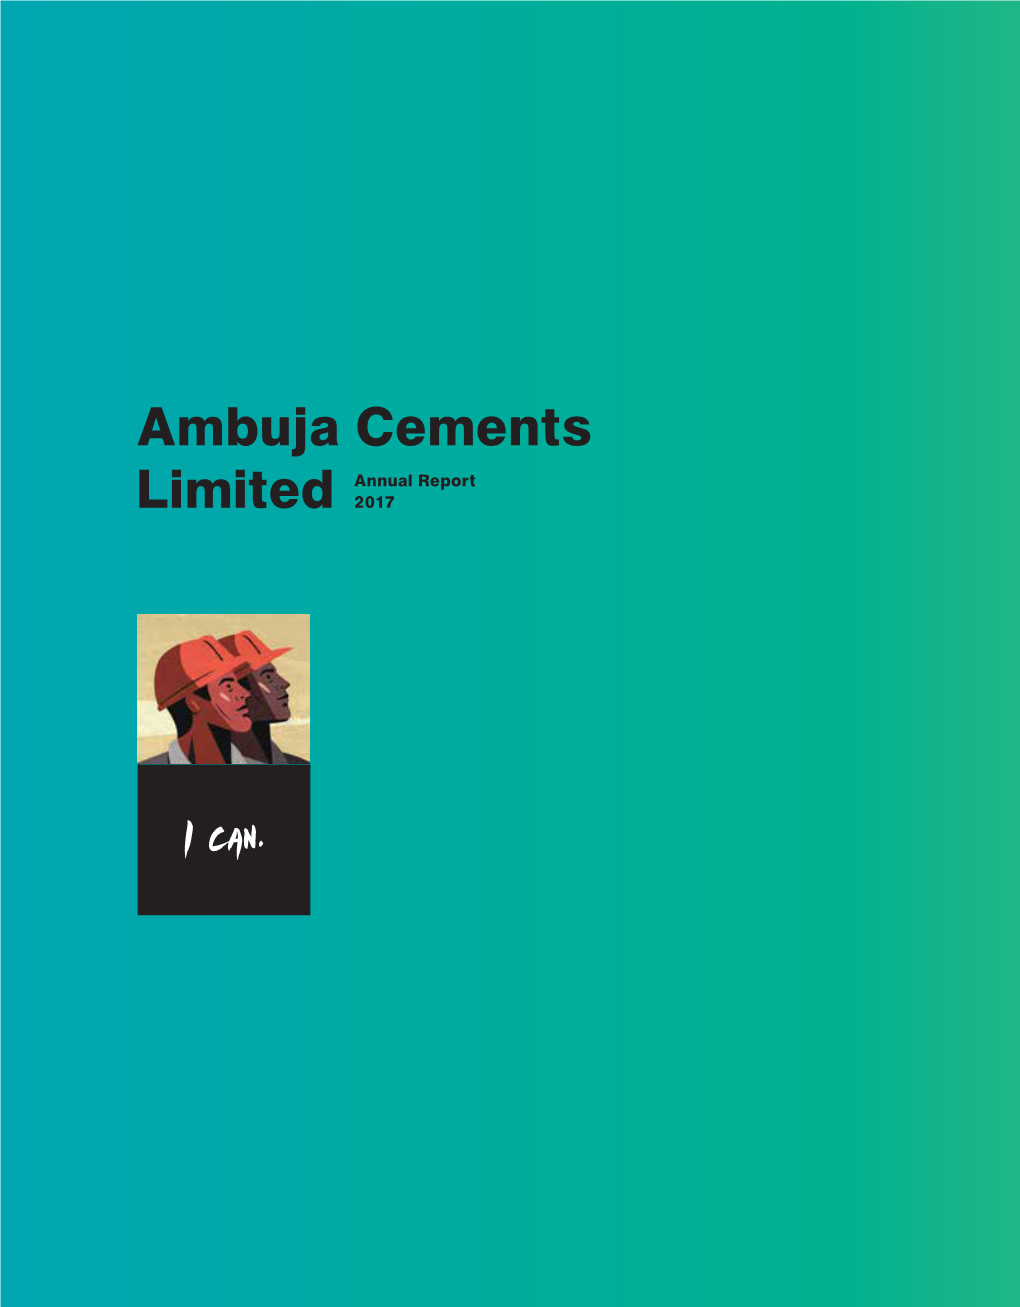 Ambuja Cements Annual Report Limited 2017